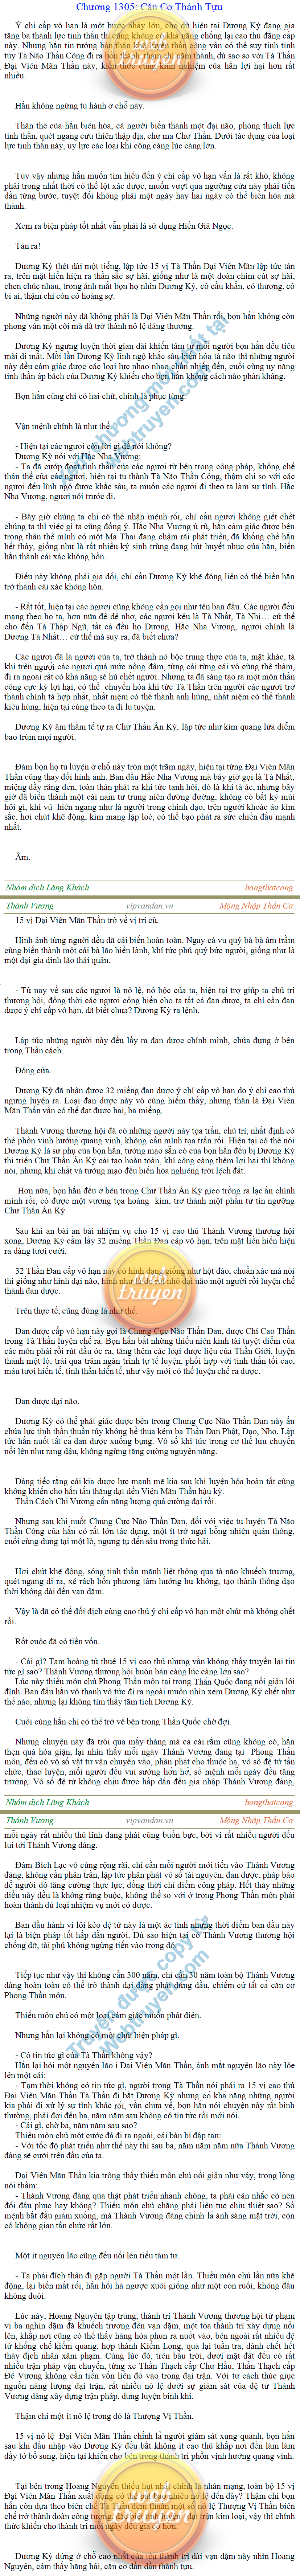 Thanh-vuong-1305.png